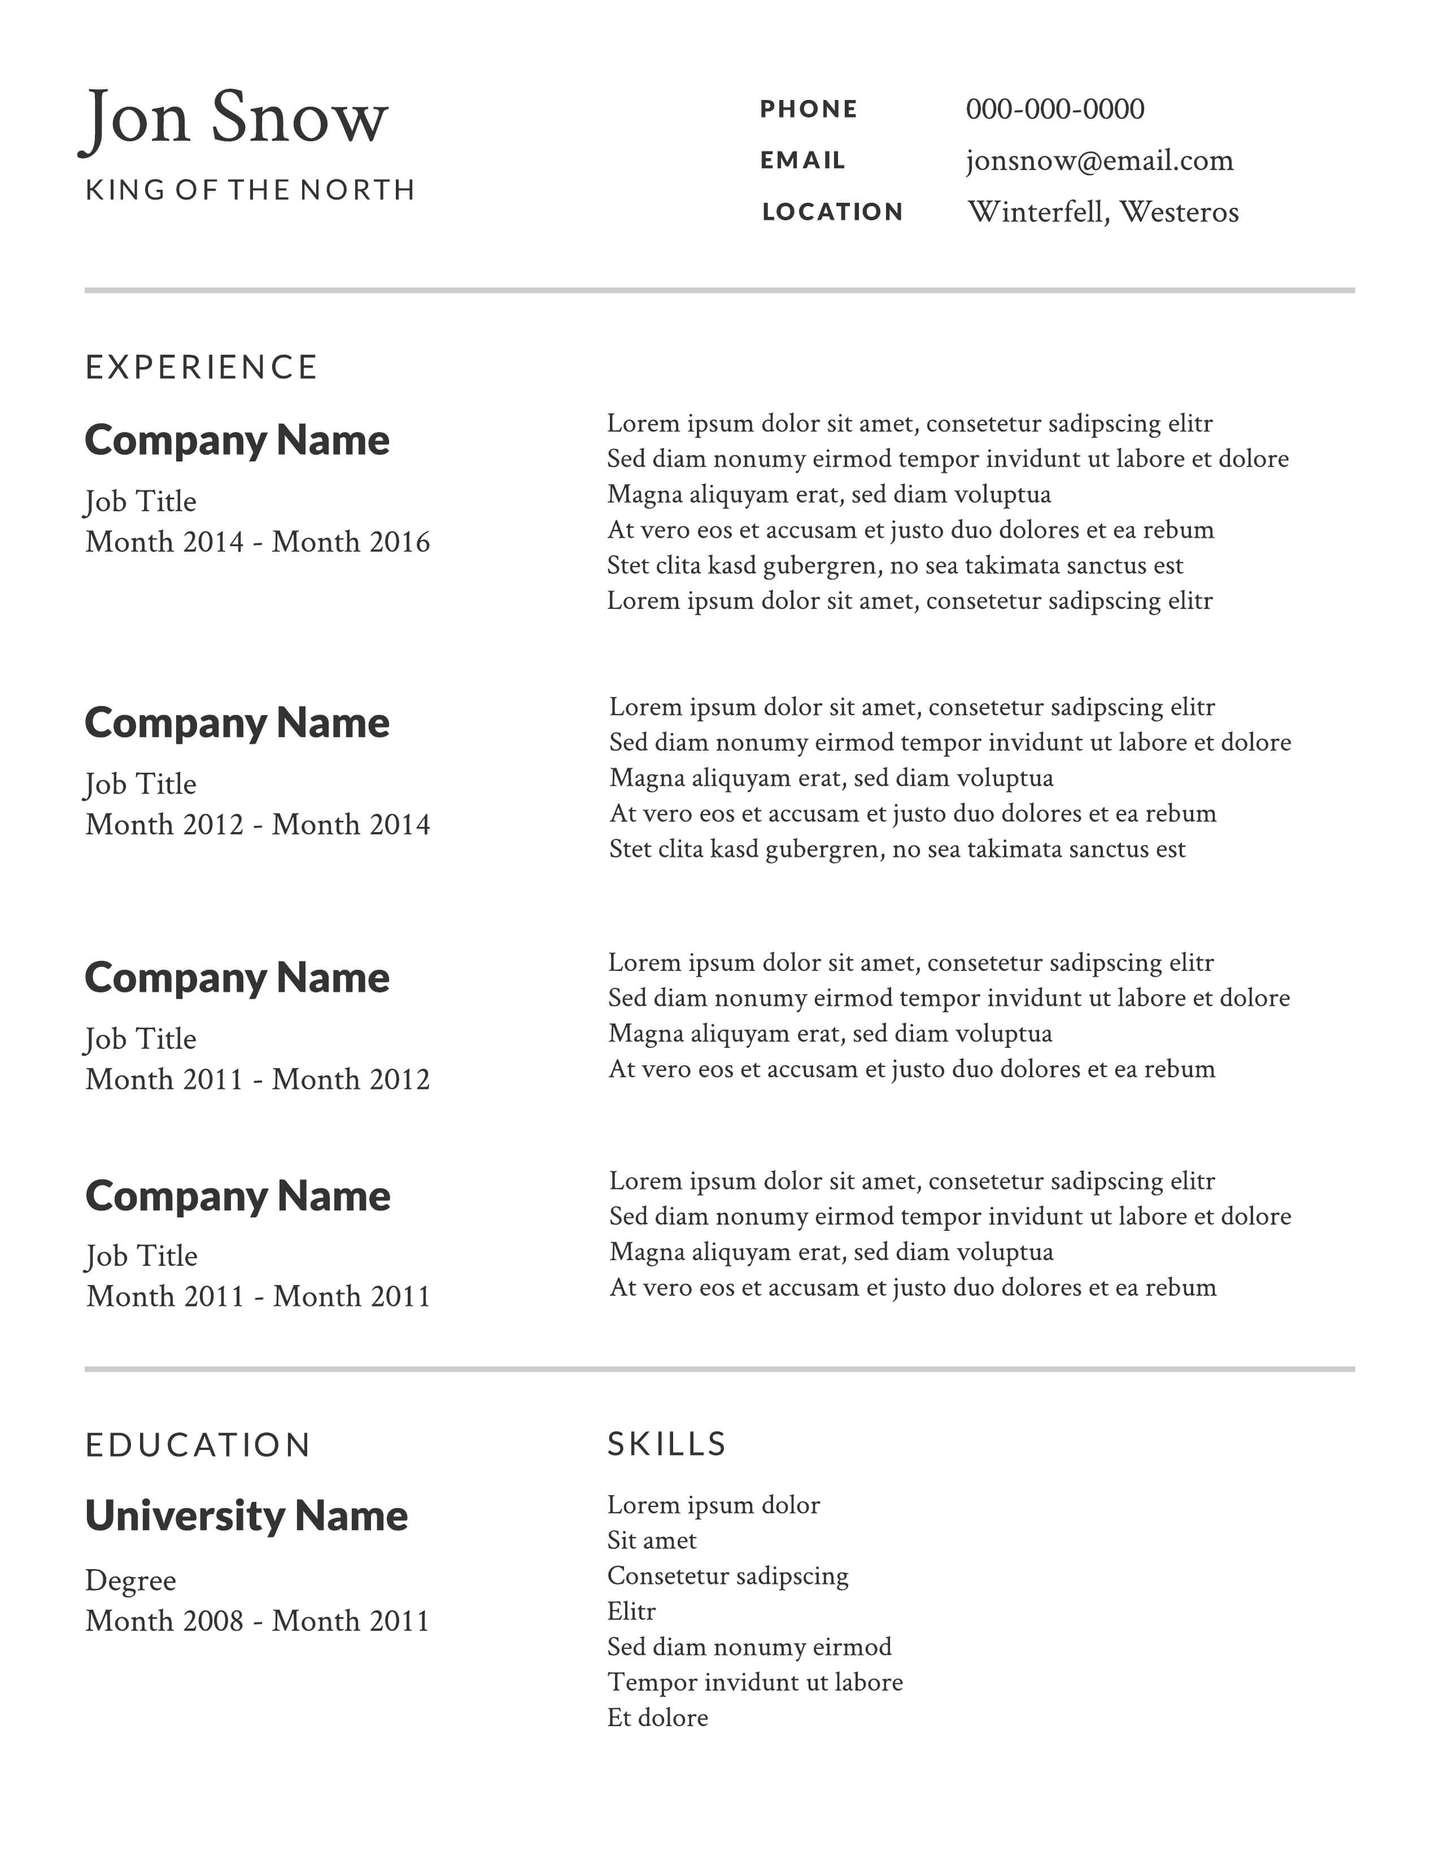 Resume Templates Free Resume Professional2x resume templates free|wikiresume.com